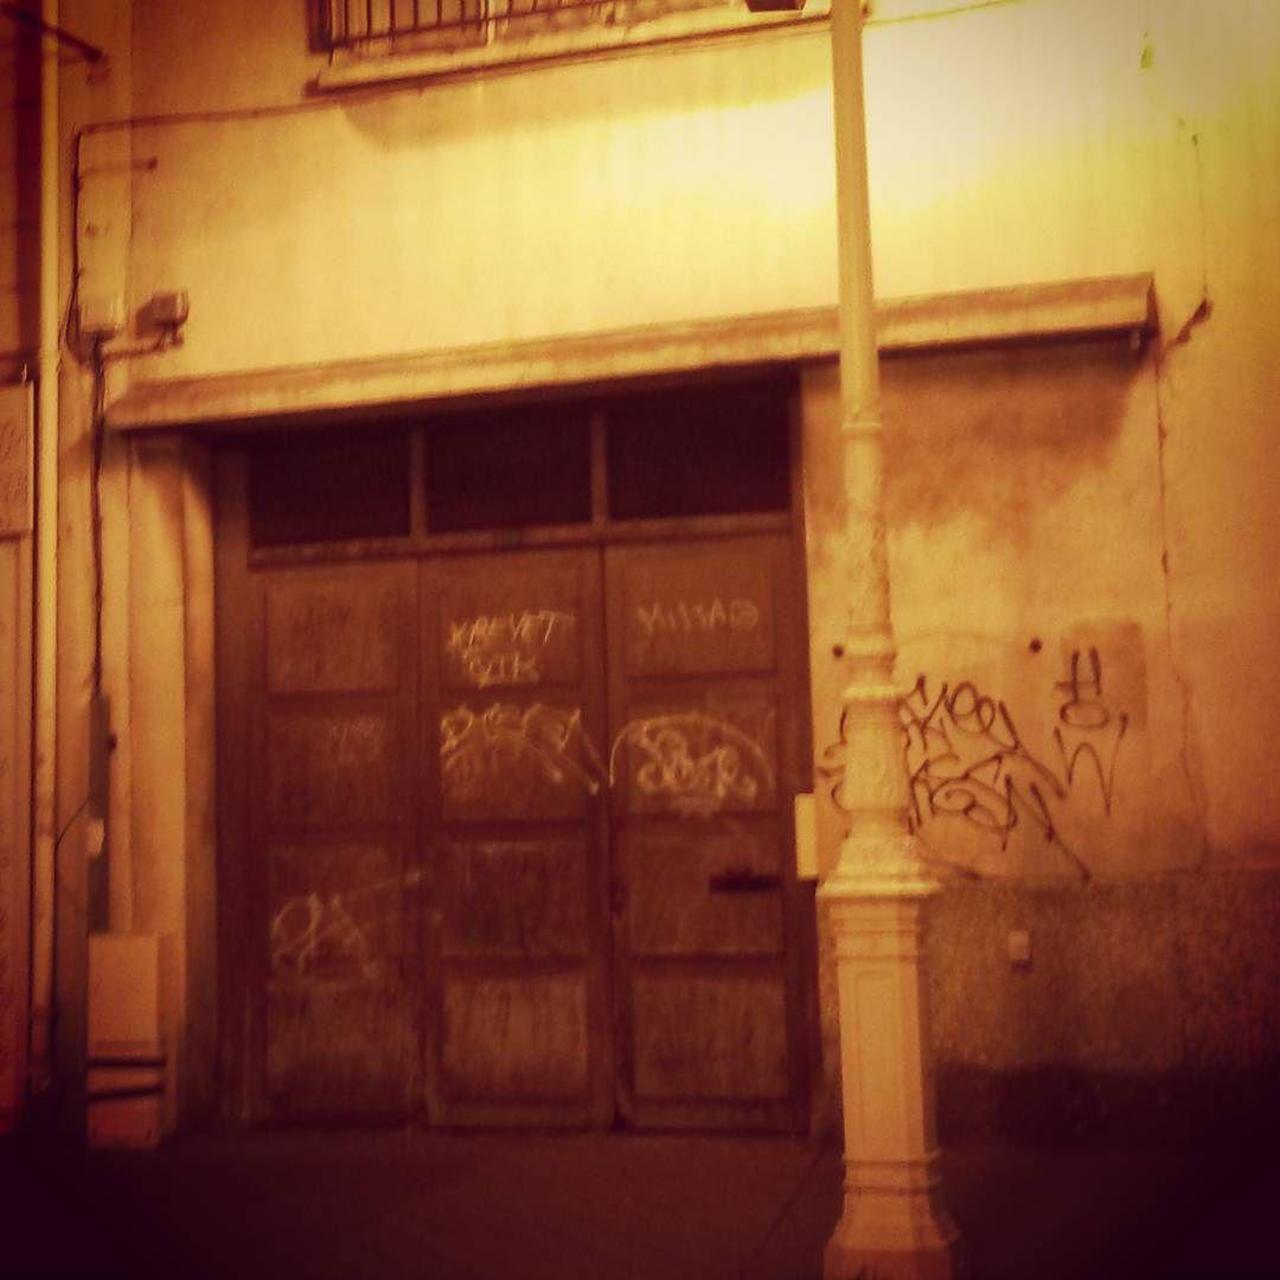 #Paris #graffiti photo by @le_cyclopede http://ift.tt/1RGnOCJ #StreetArt http://t.co/TsrhZADnhW